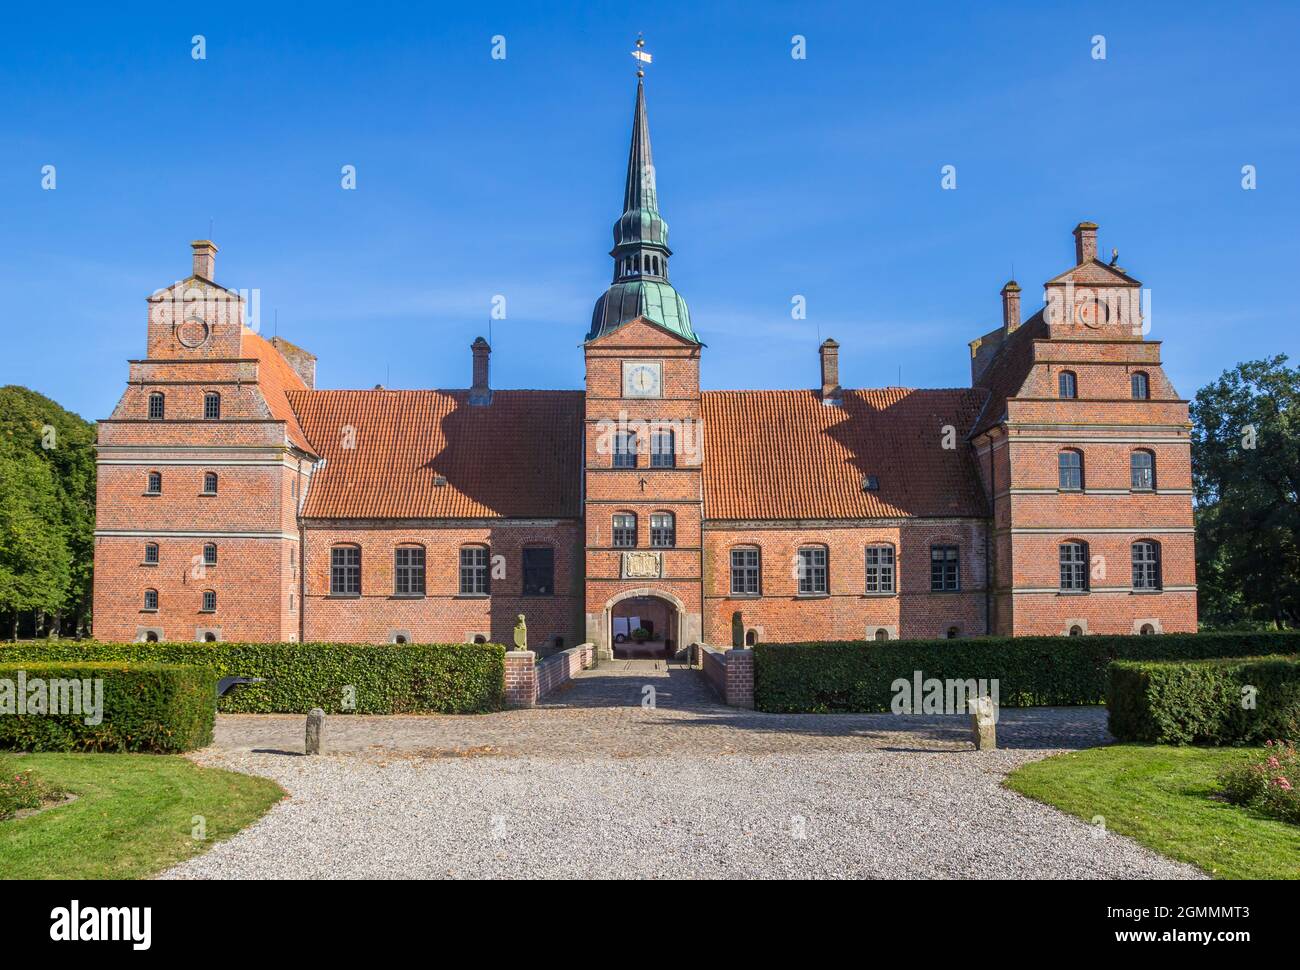 Front facade of the historic castle in Rosenholm, Denmark Stock Photo